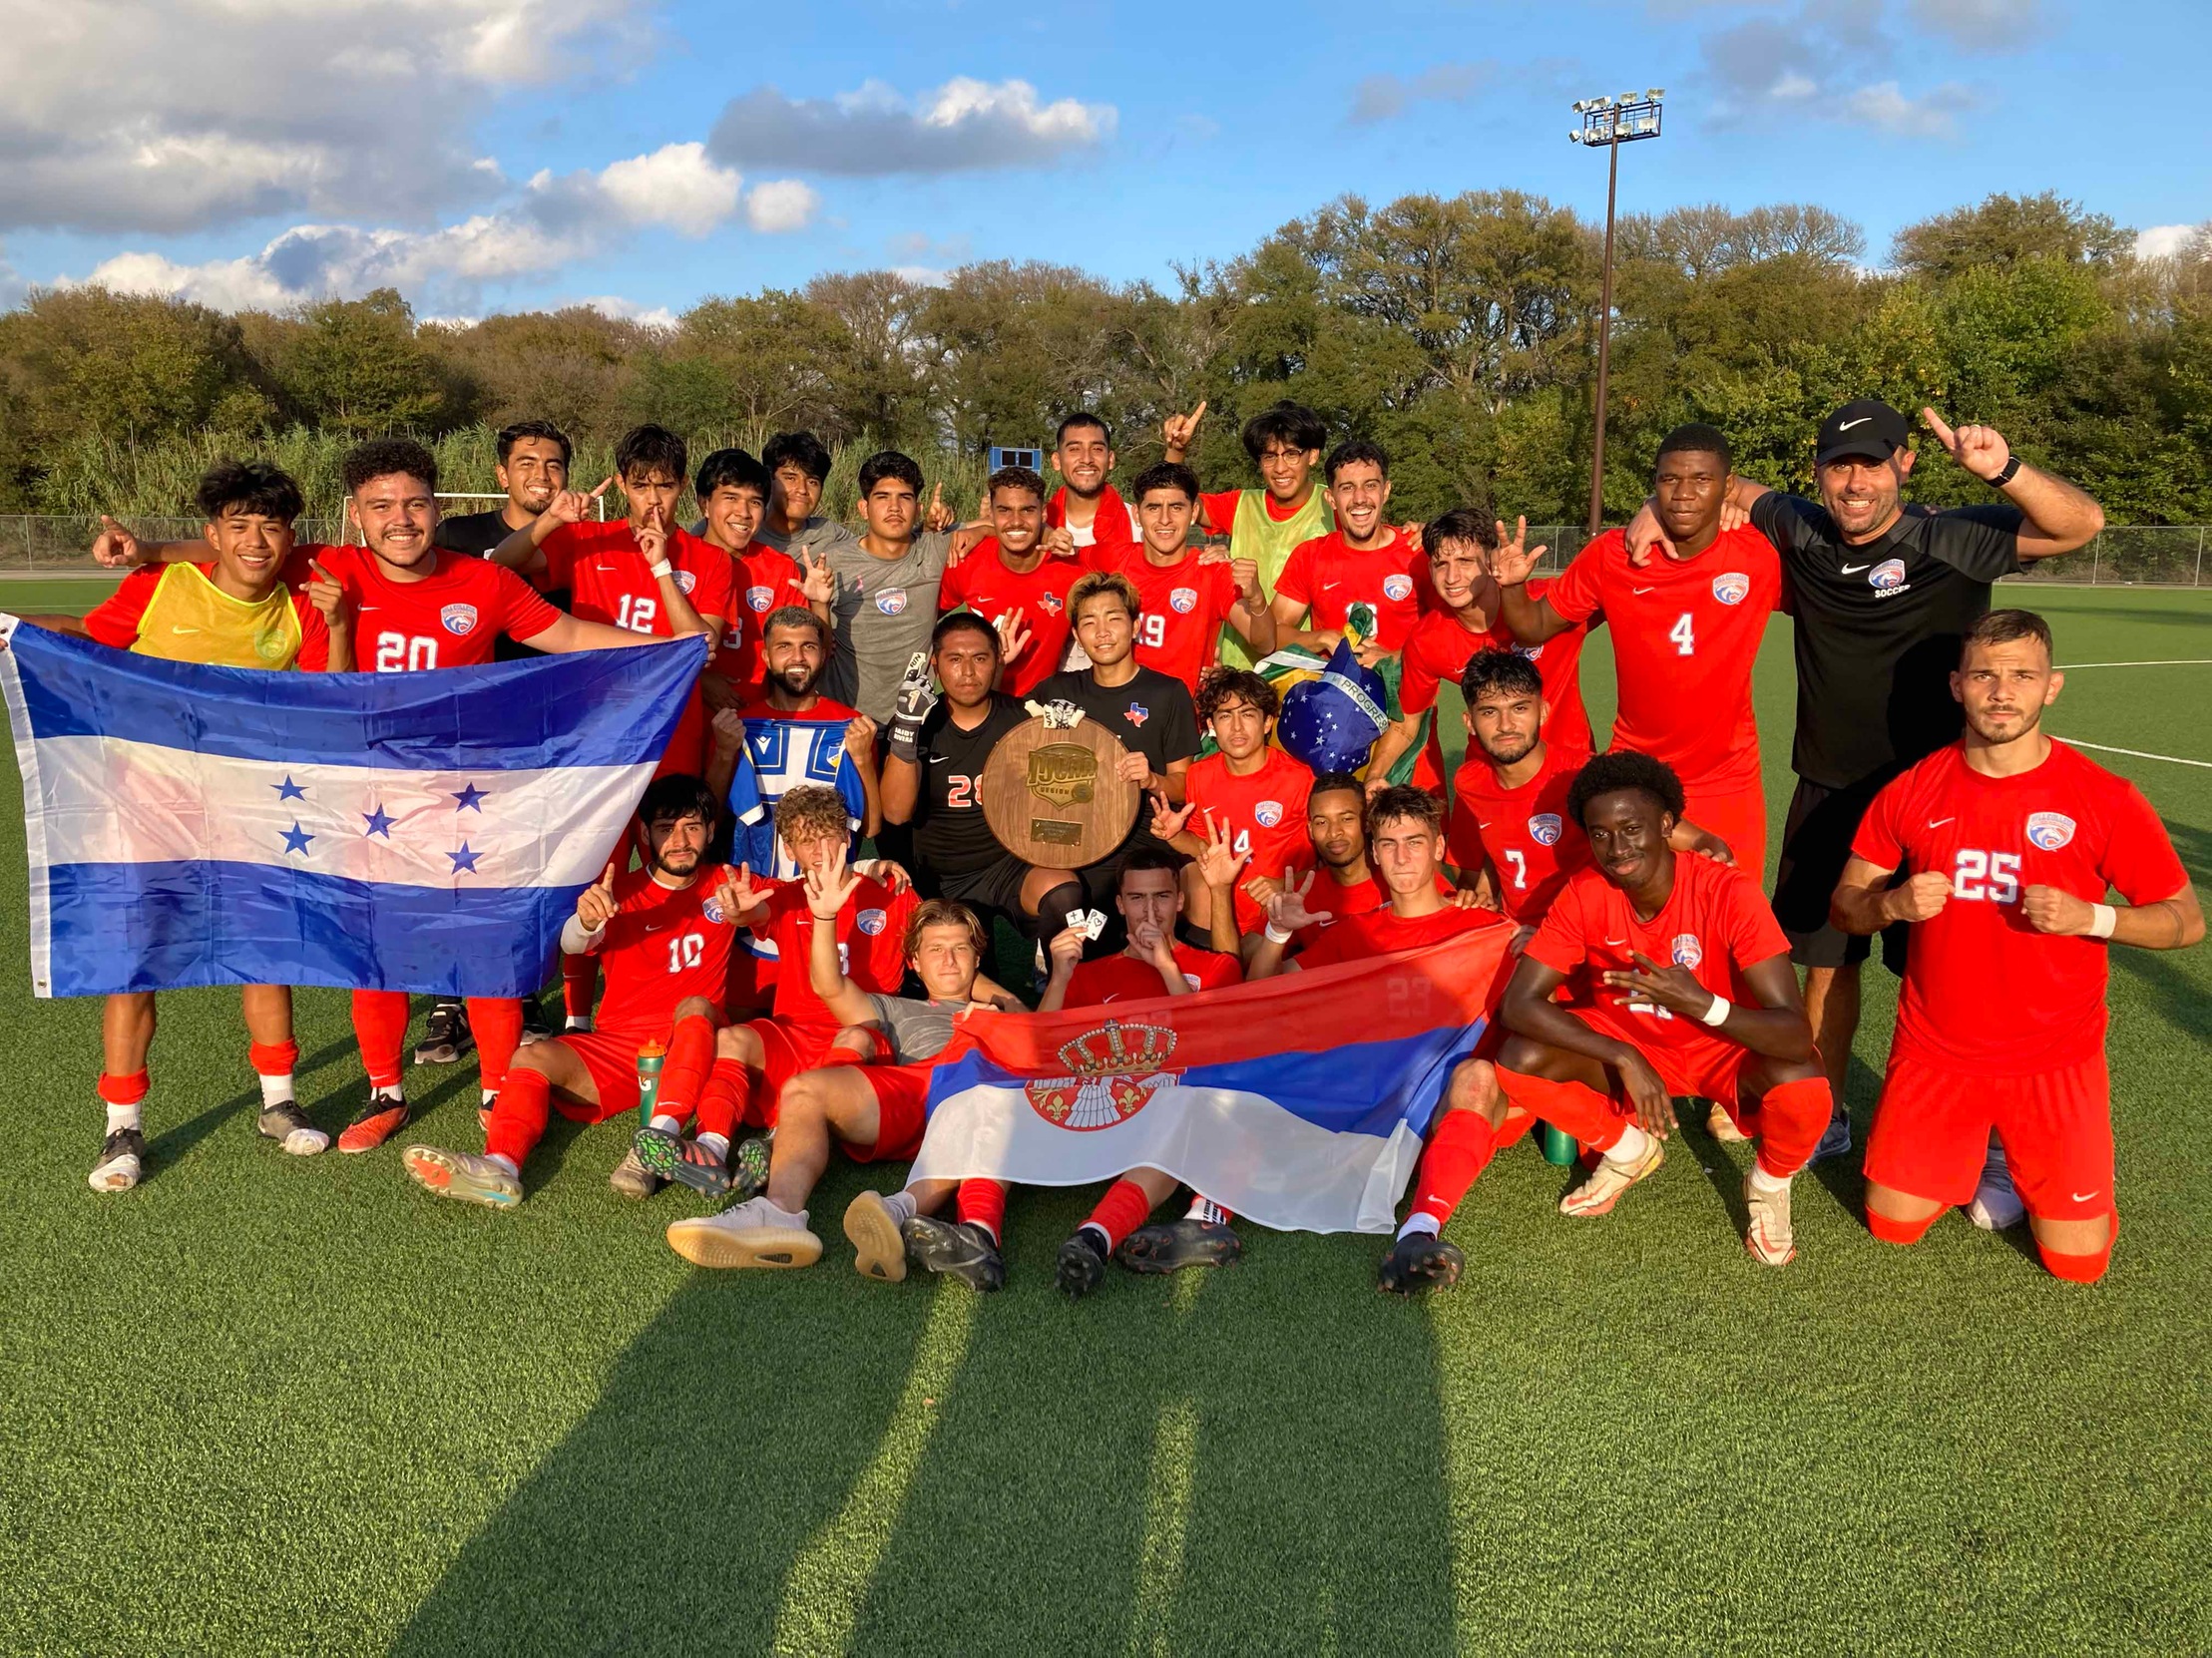 Rebels win Region V soccer title